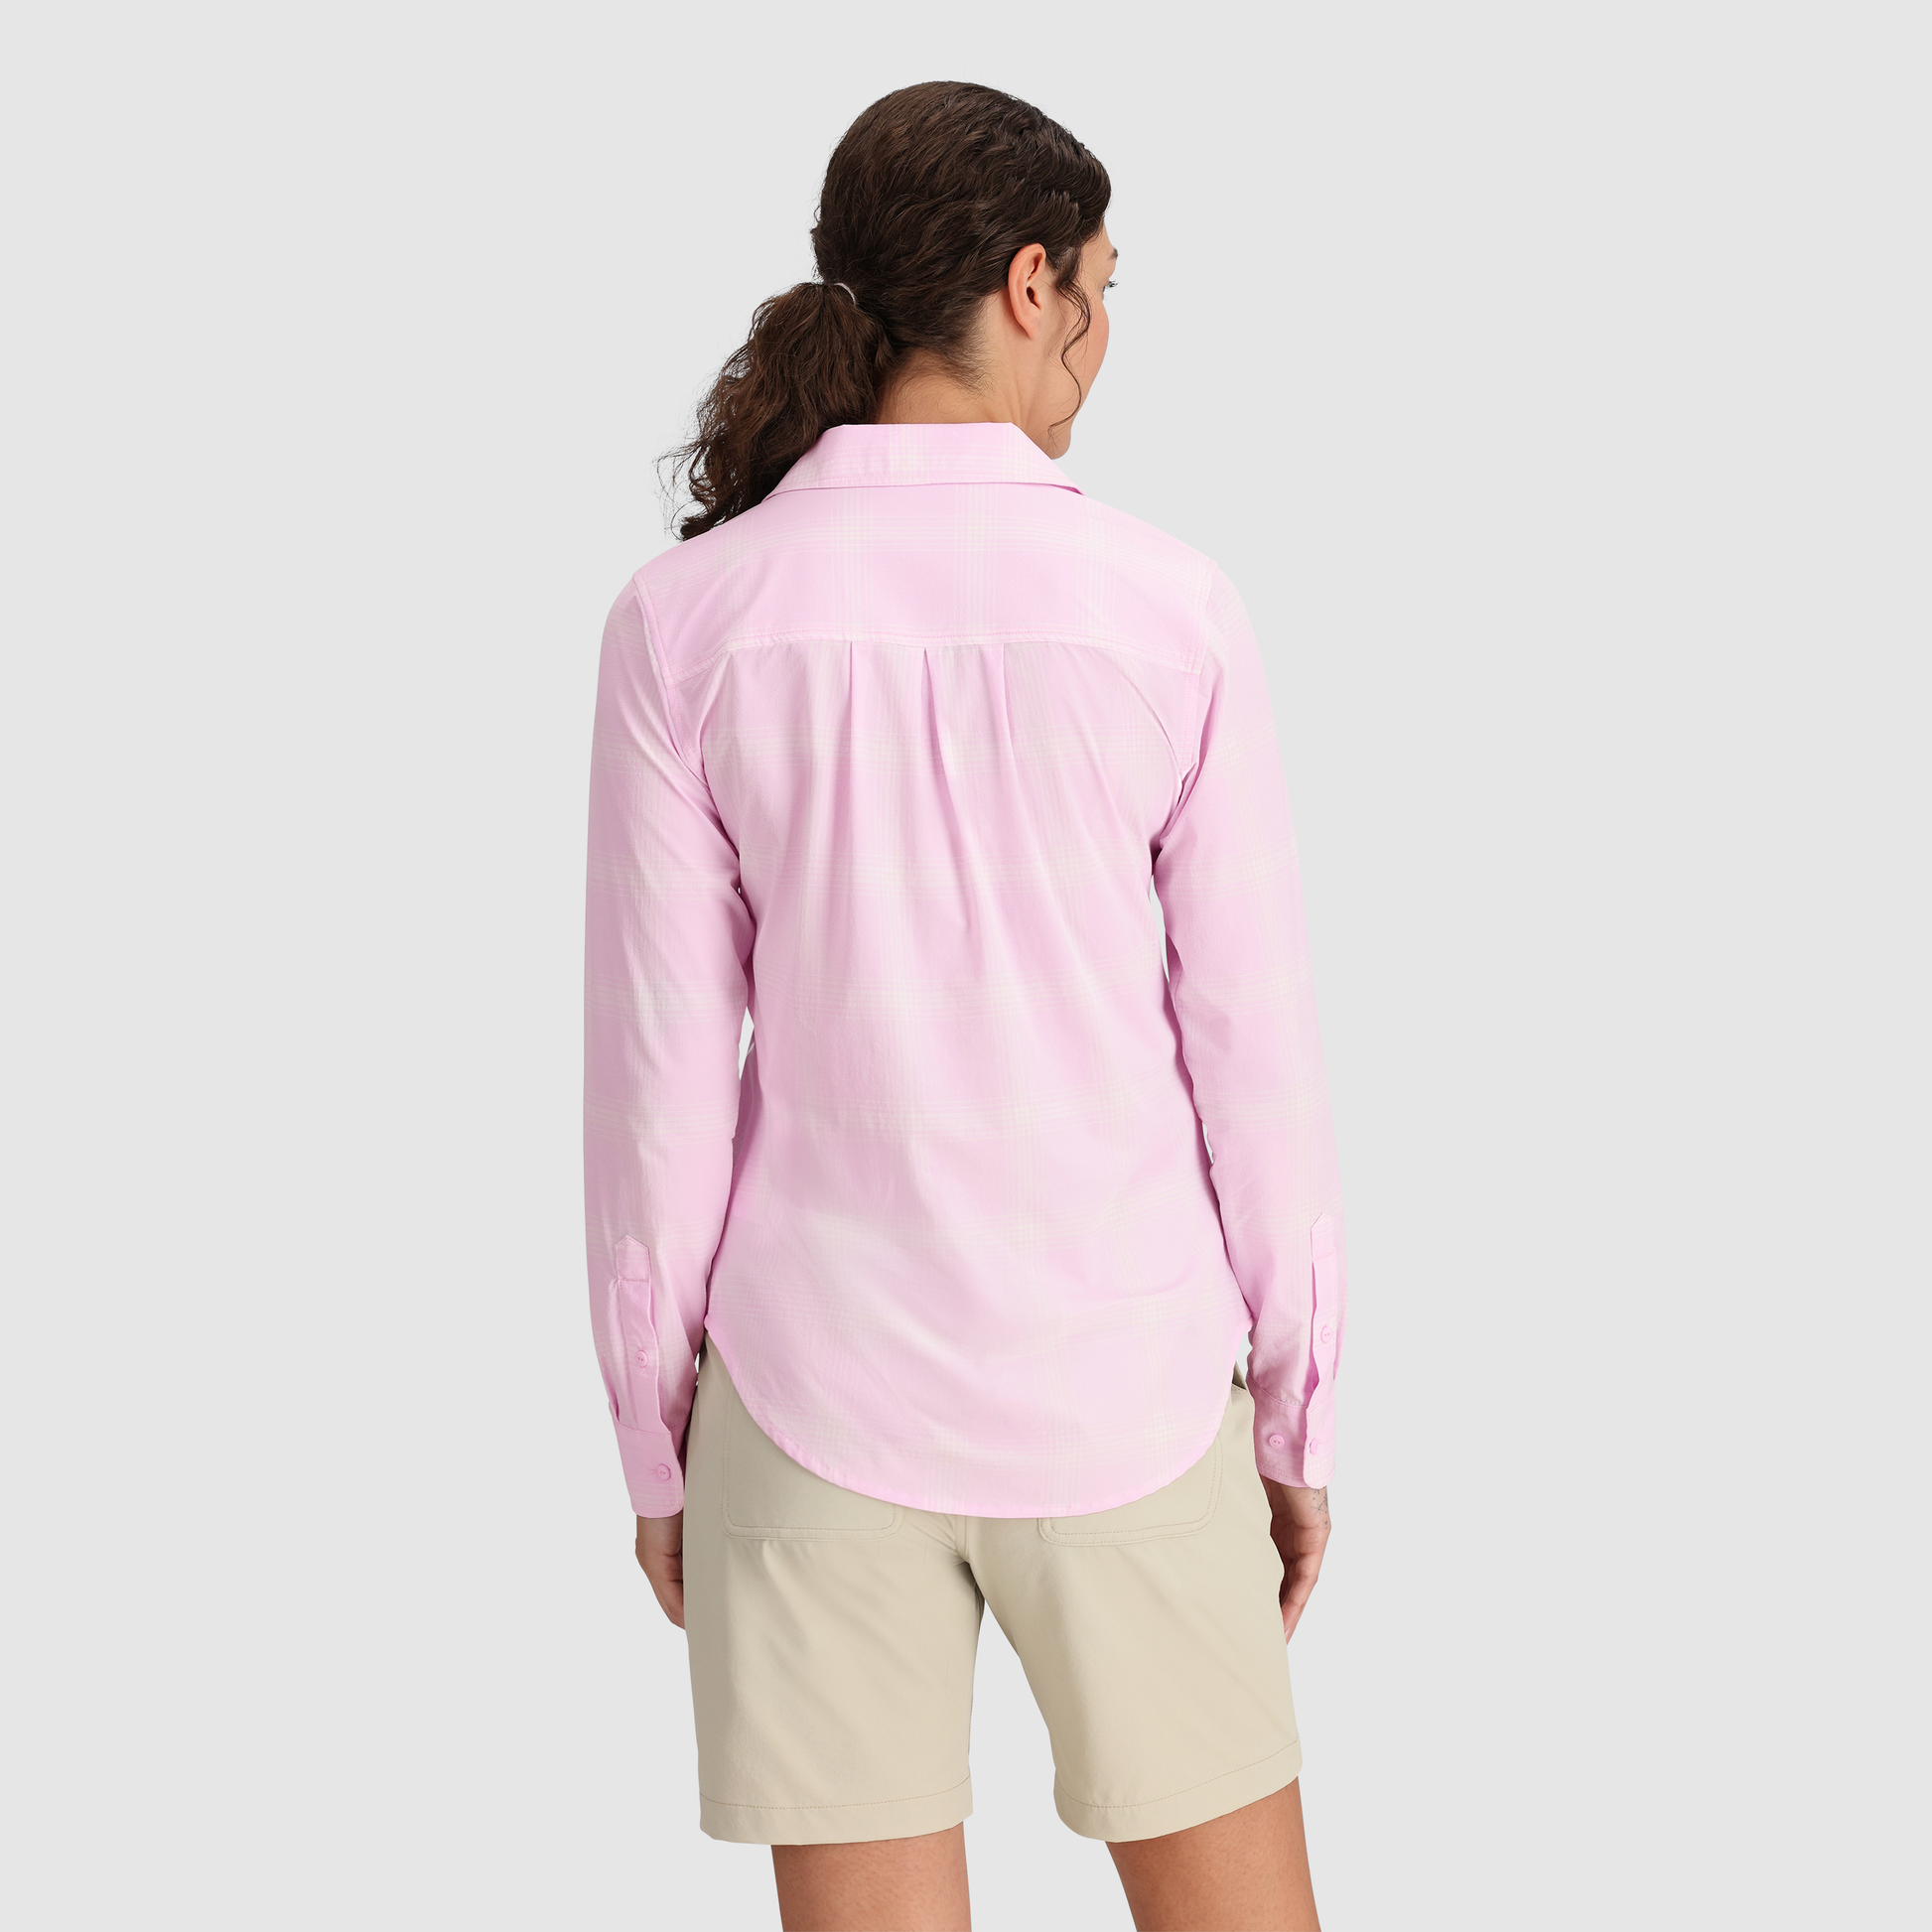 Reel Life Women's Long sleeve UV Tee Shirt UPF 50+ Base Layer Top